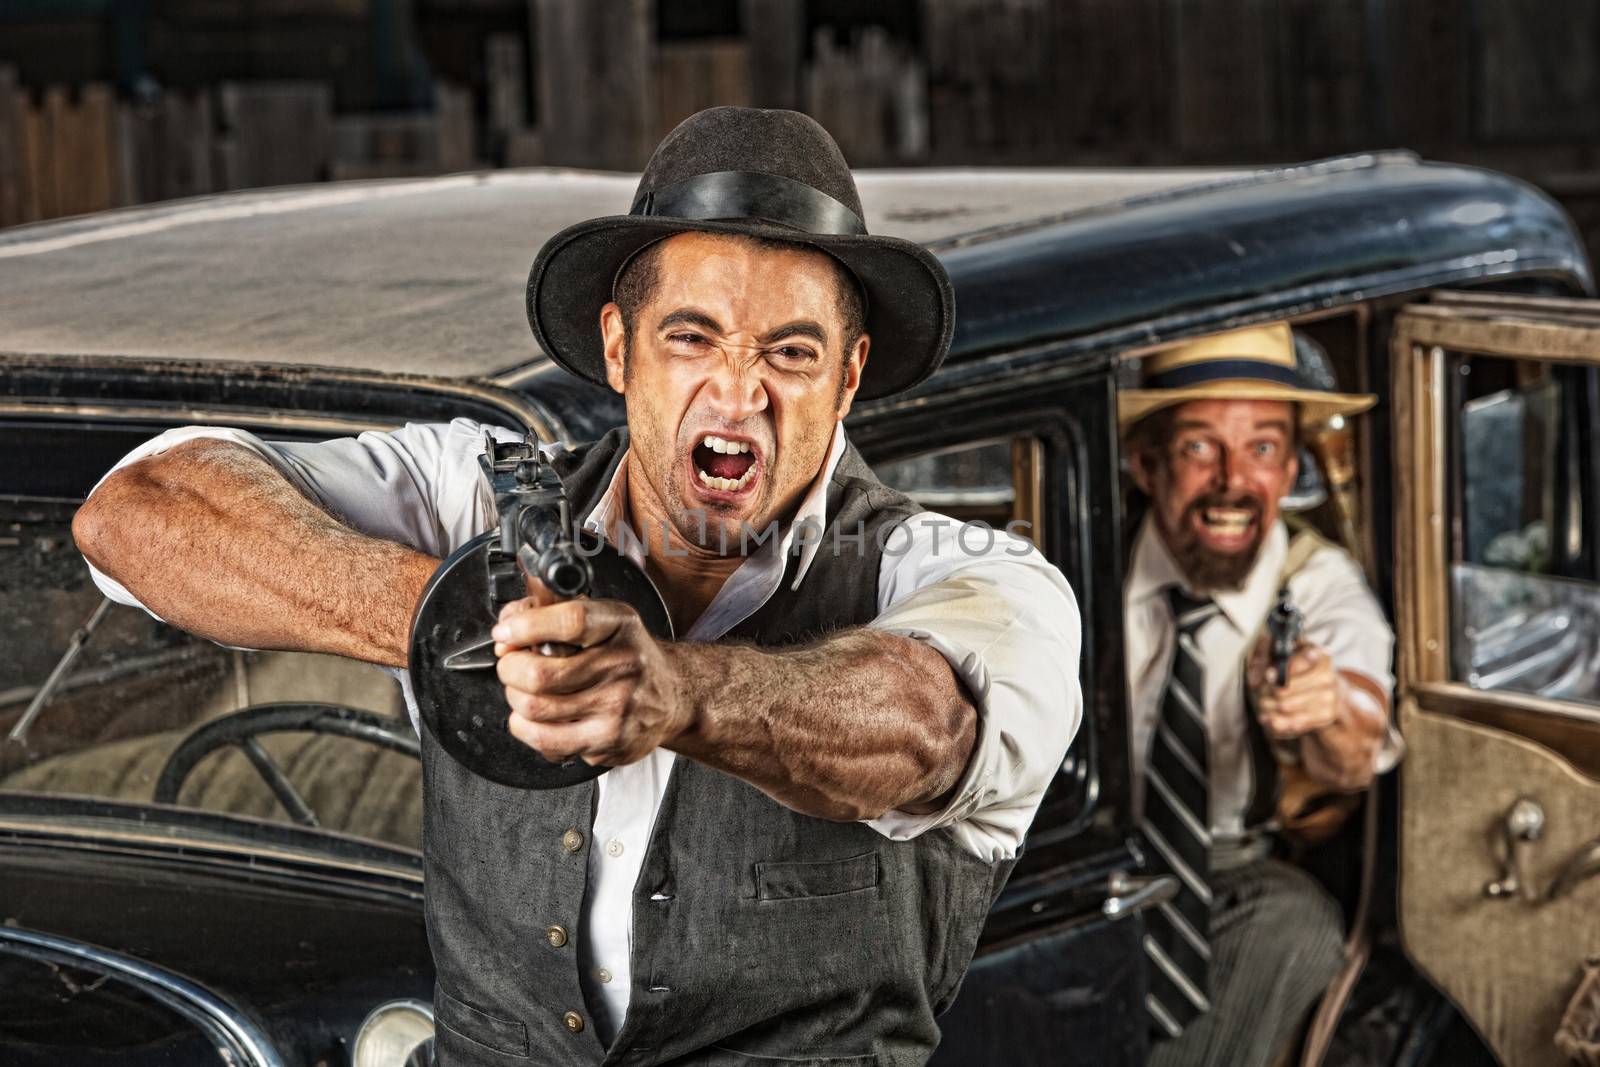 Angry mobsters firing submachine gun near antique car